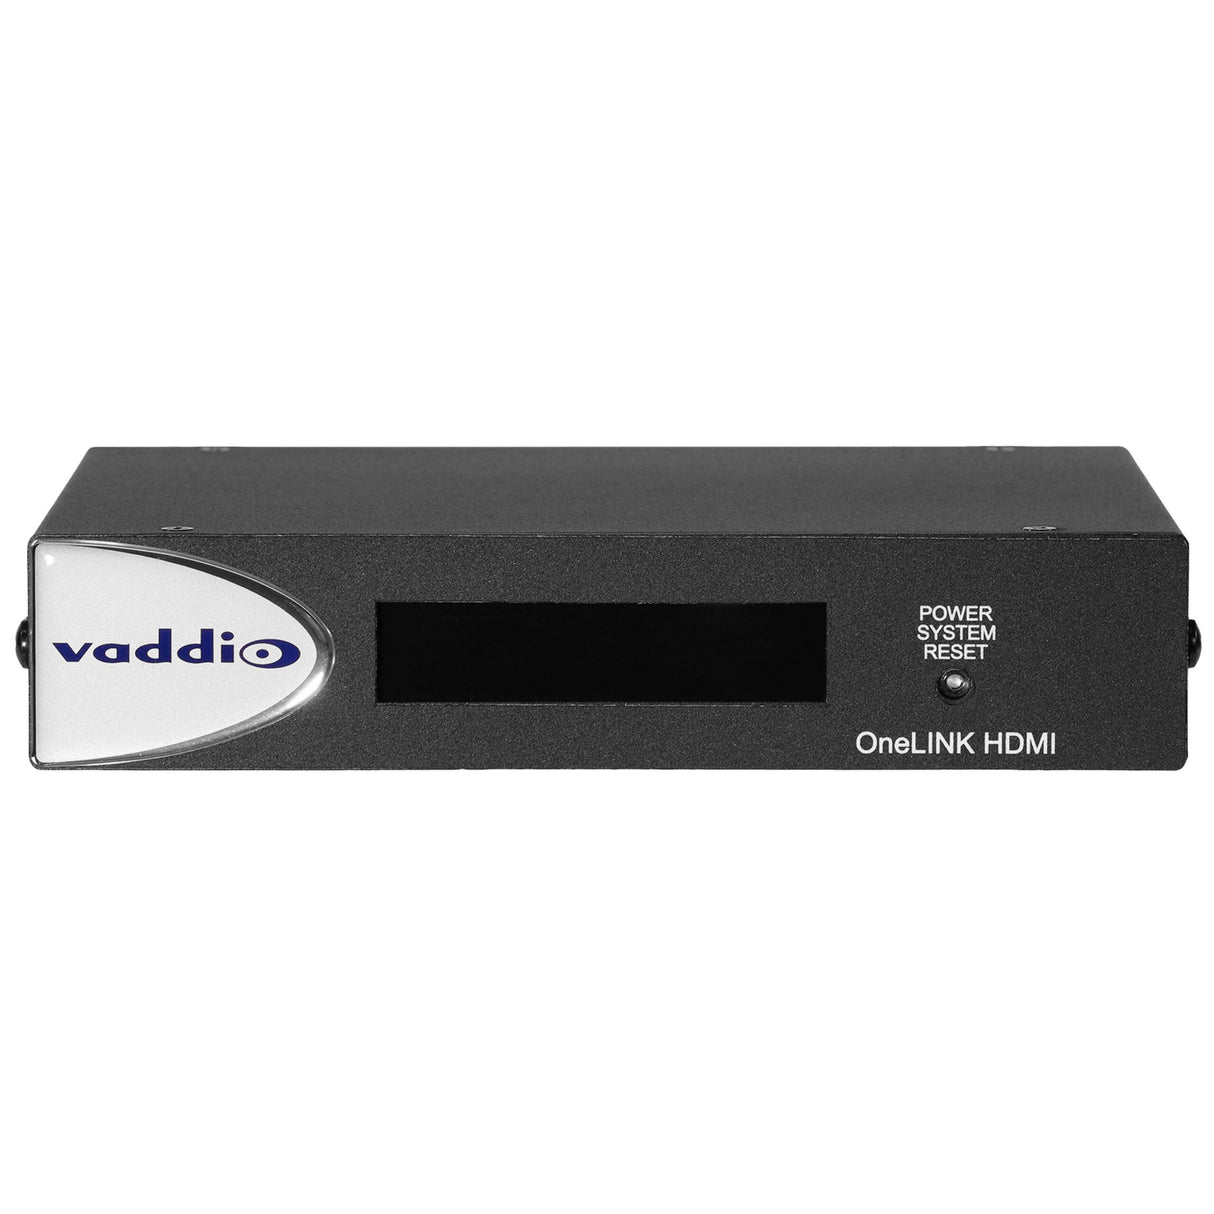 Vaddio 999-99600-100 RoboSHOT 12E HDBT OneLINK HDMI System, Black